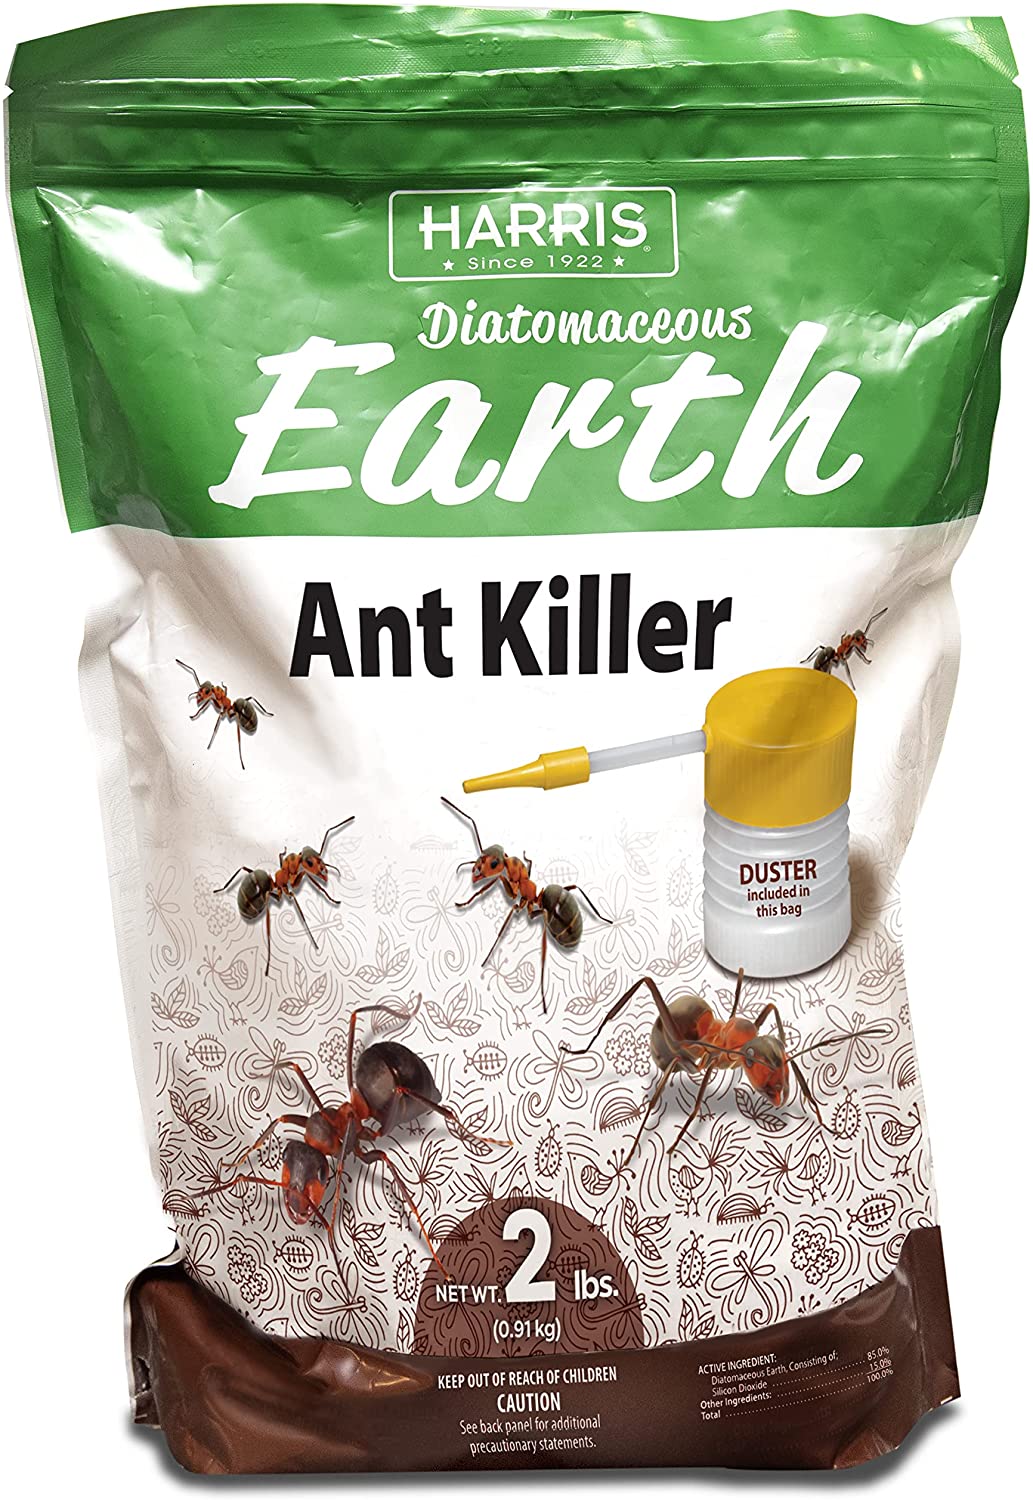 Harris Diatomaceous Earth Ant Killer Powder (2lb) with Duster Applicator